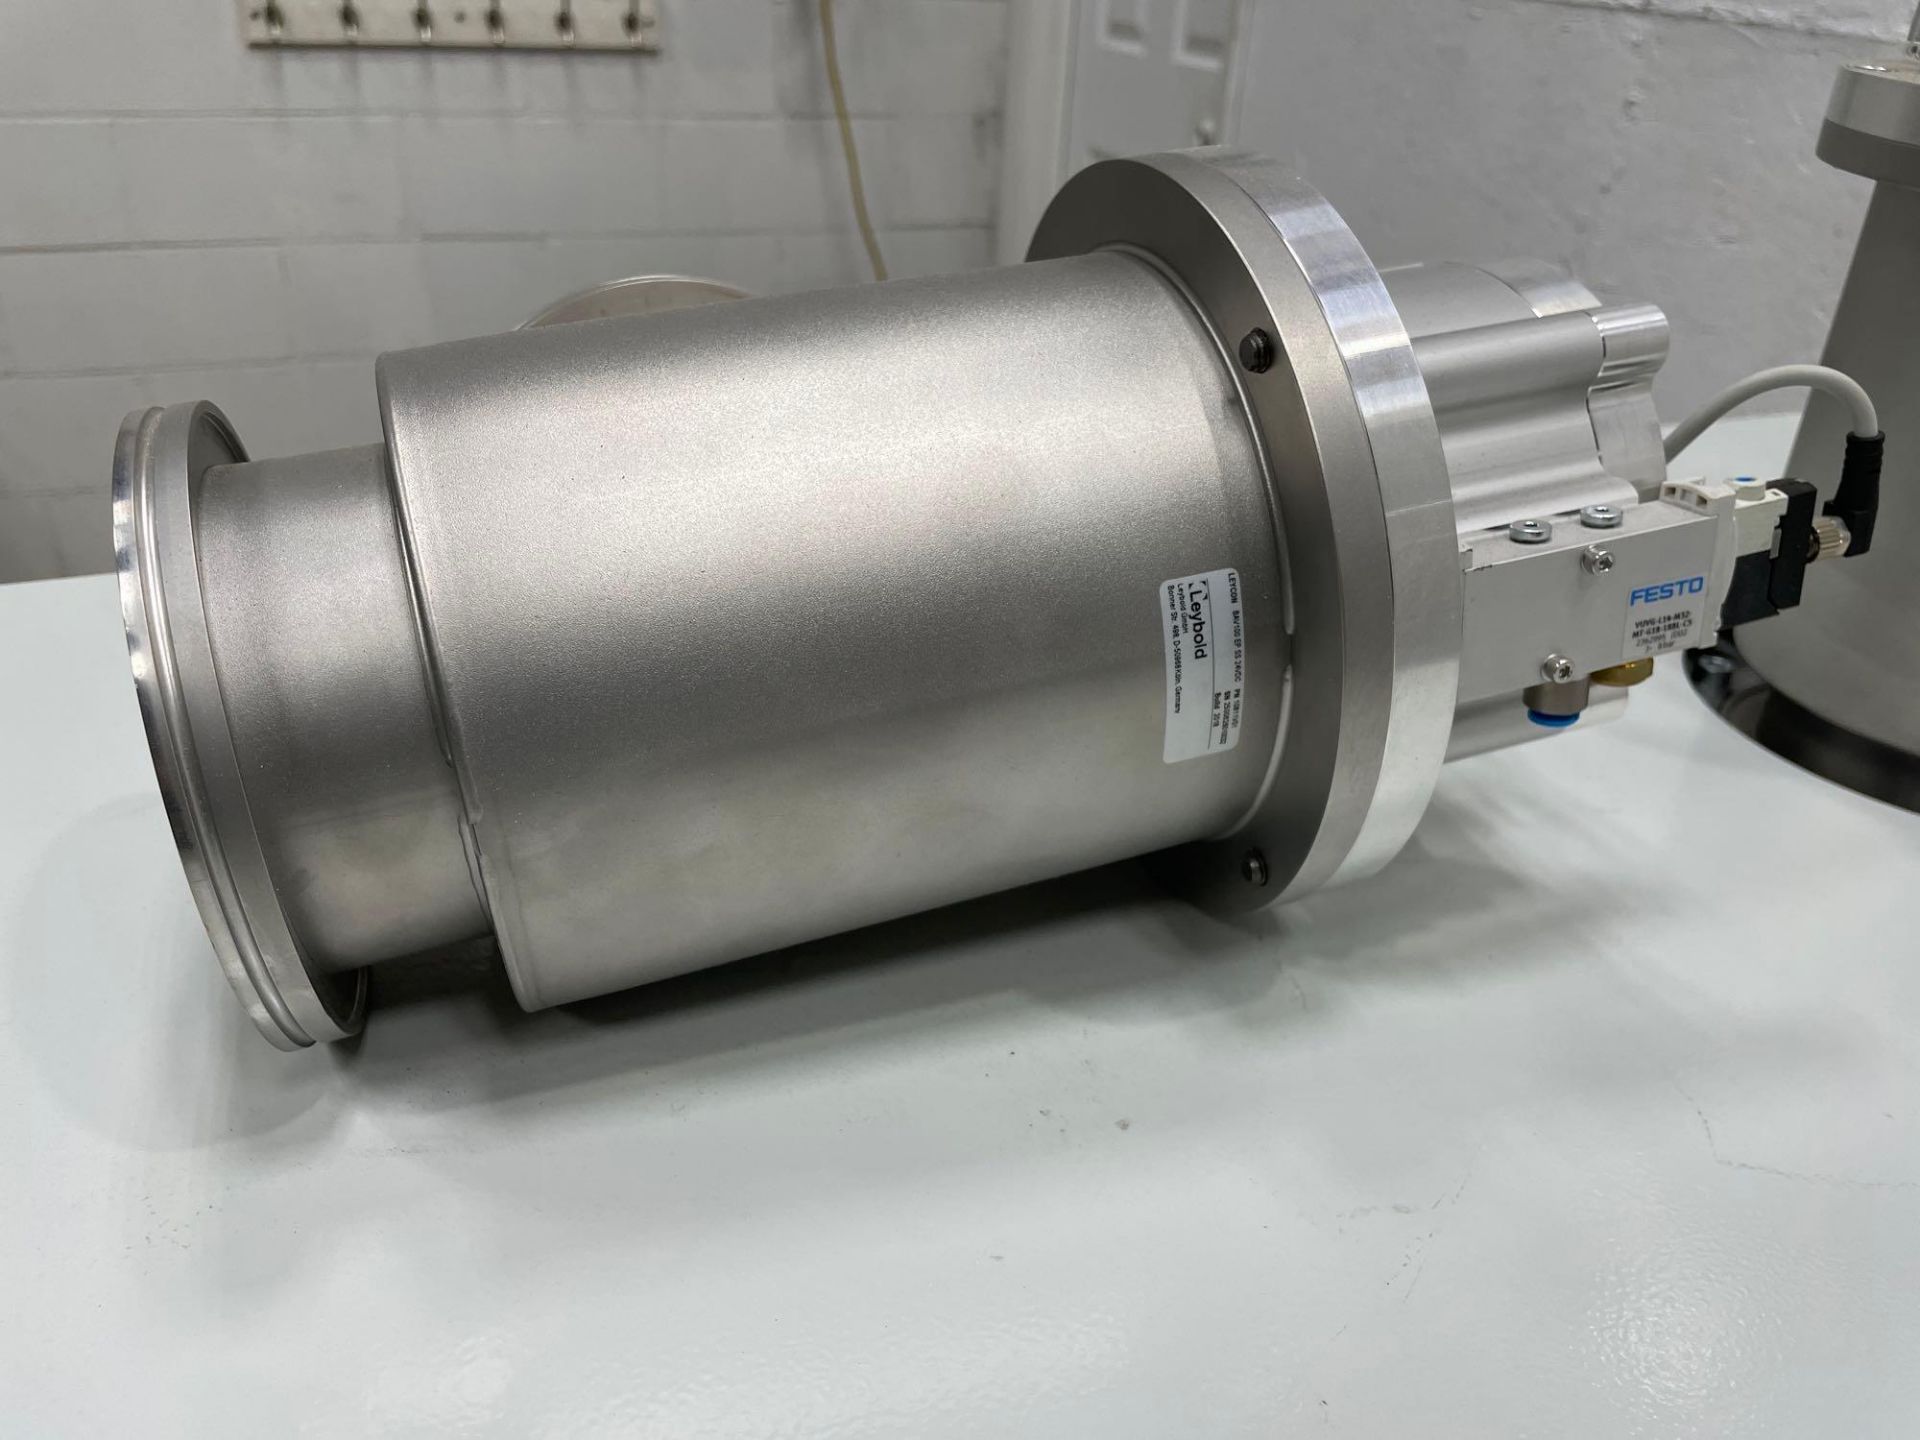 Lebold DV 1200 S-i Screw Vacuum Pump, DryVac, Dry Compressing 112120V50-1 2018 - Image 11 of 19